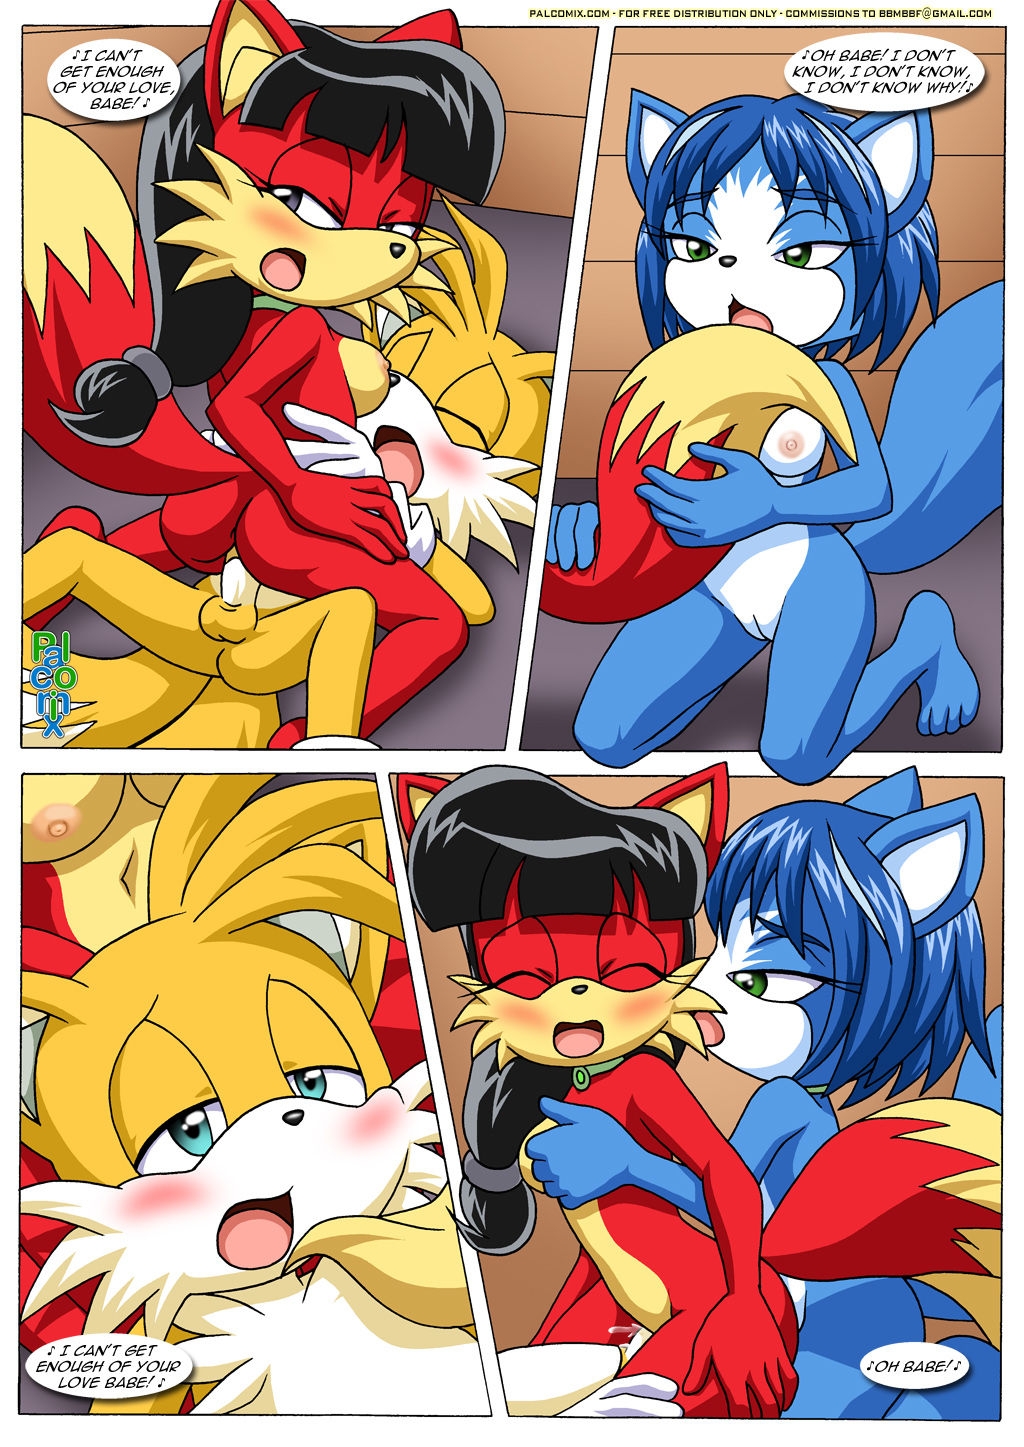 [Palcomix] FoXXXes (Sonic the Hedgehog, Star Fox) 31